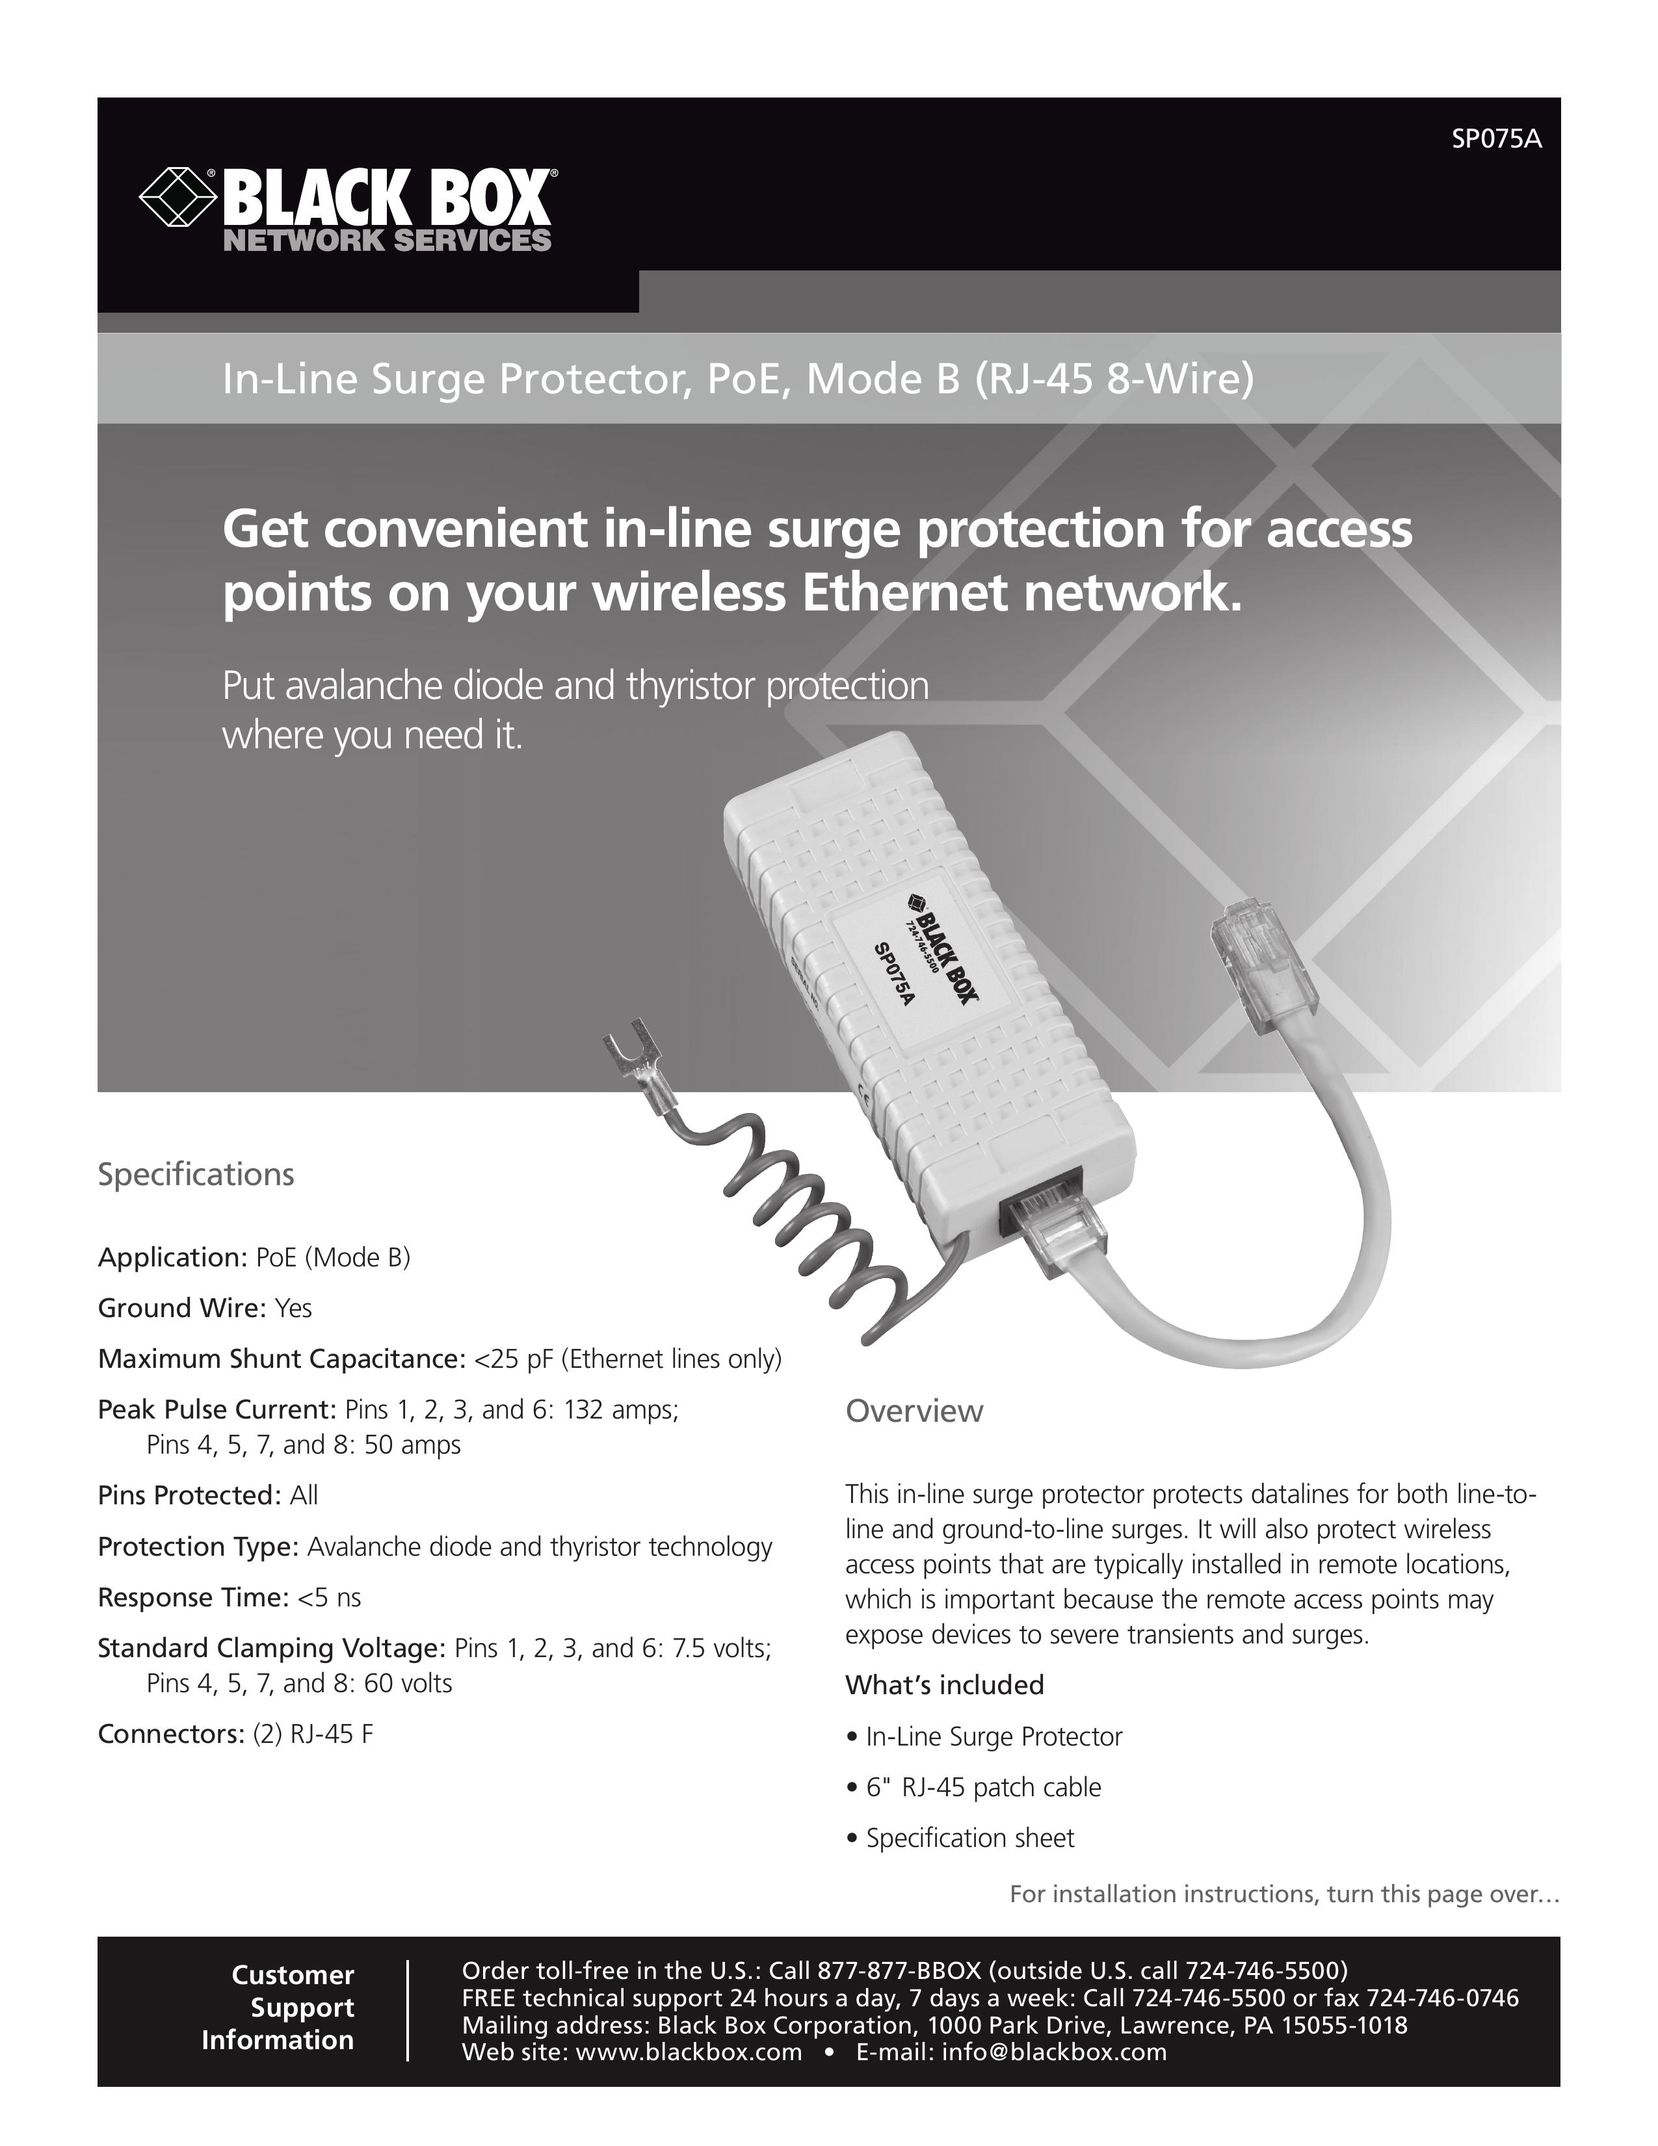 Black Box SP075A Surge Protector User Manual